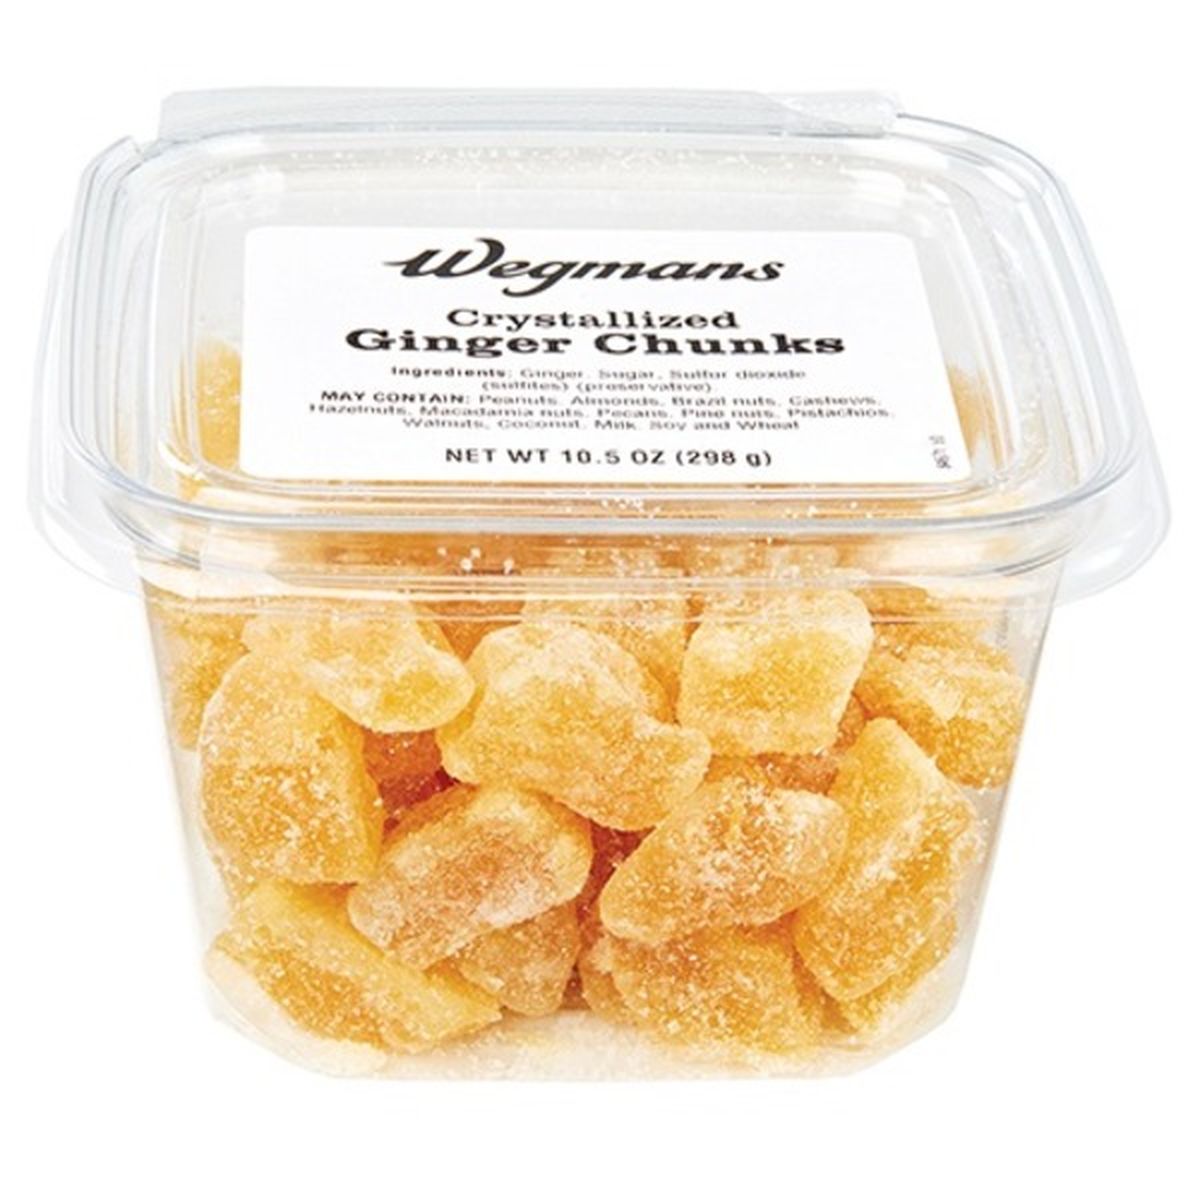 Calories in Wegmans Crystallized Ginger Chunks